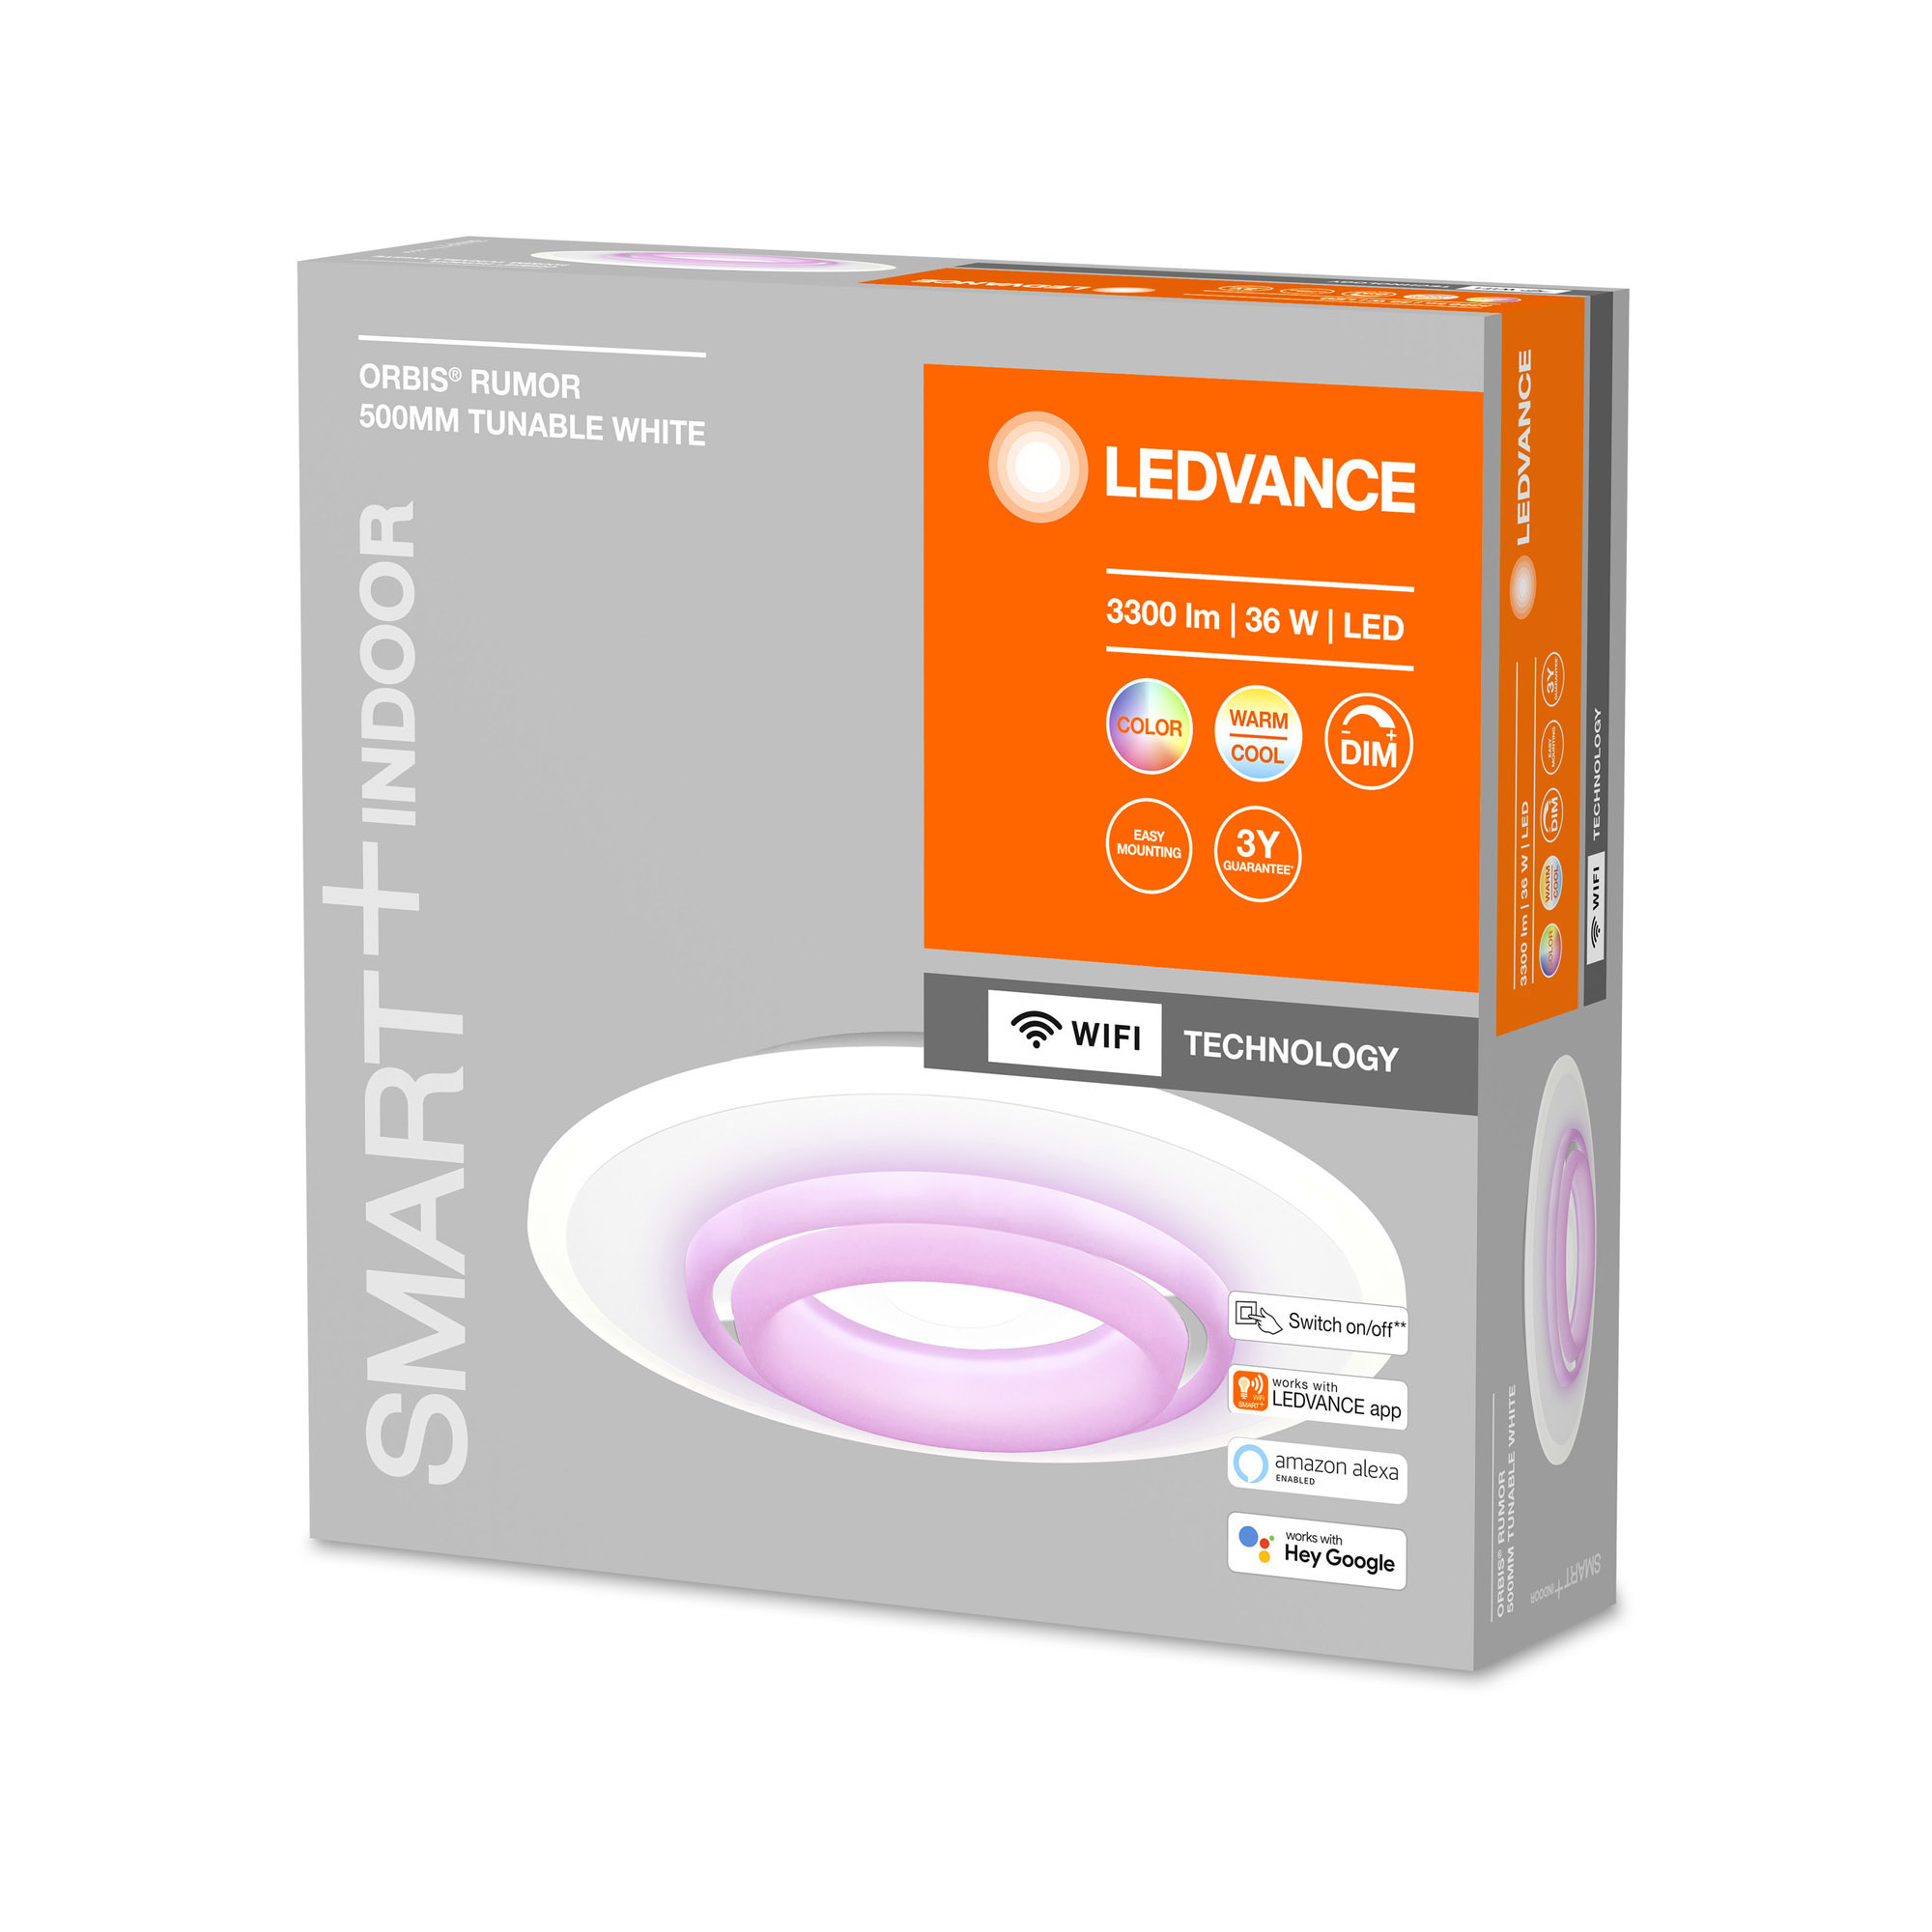 LEDVANCE SMART+ WiFi Tunable White RGB LED Ceiling Light ORBIS Rumor 500mm grey 3300lm